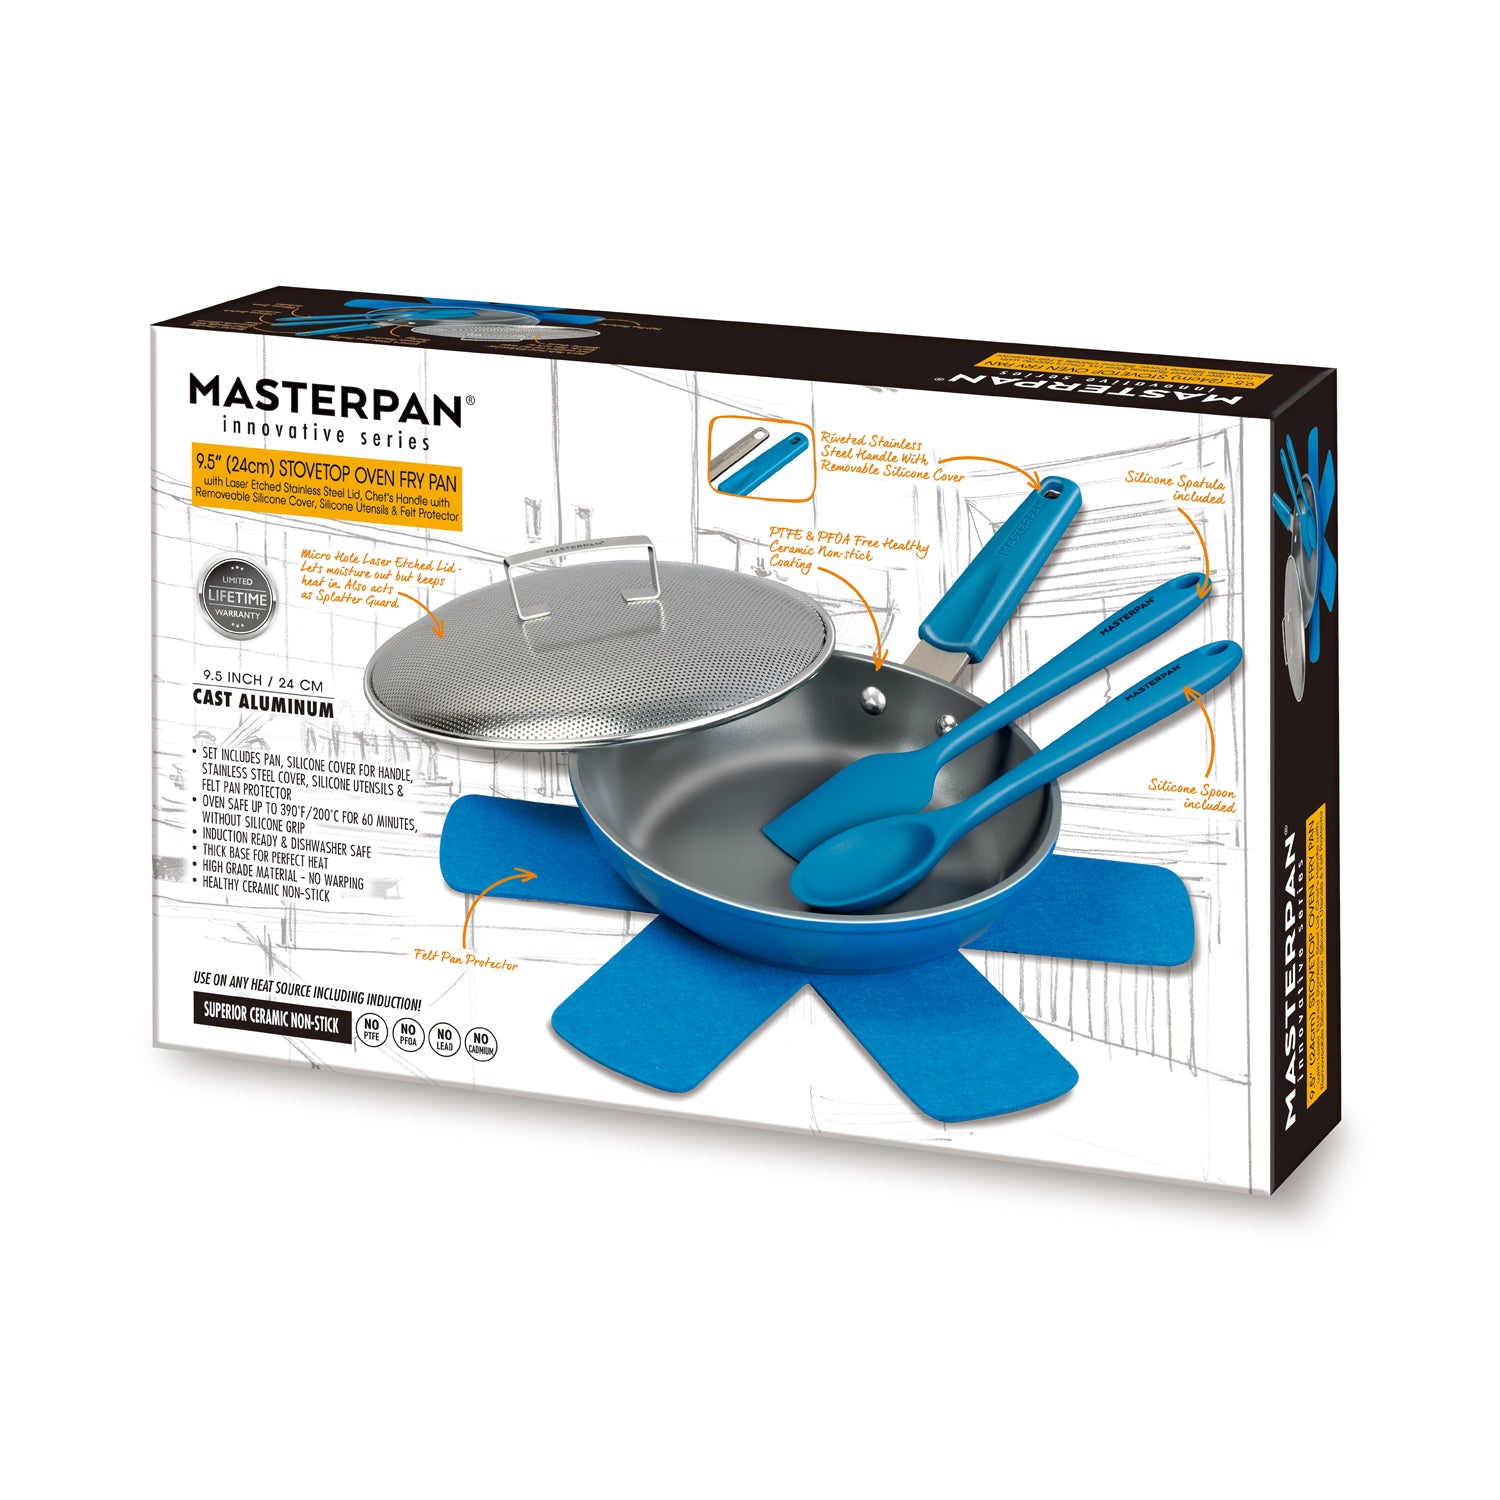 MASTERPAN Ceramic Nonstick Stovetop Oven Frypan & Skillet & Stainless Steel Lid Set, Azure Color 9.5